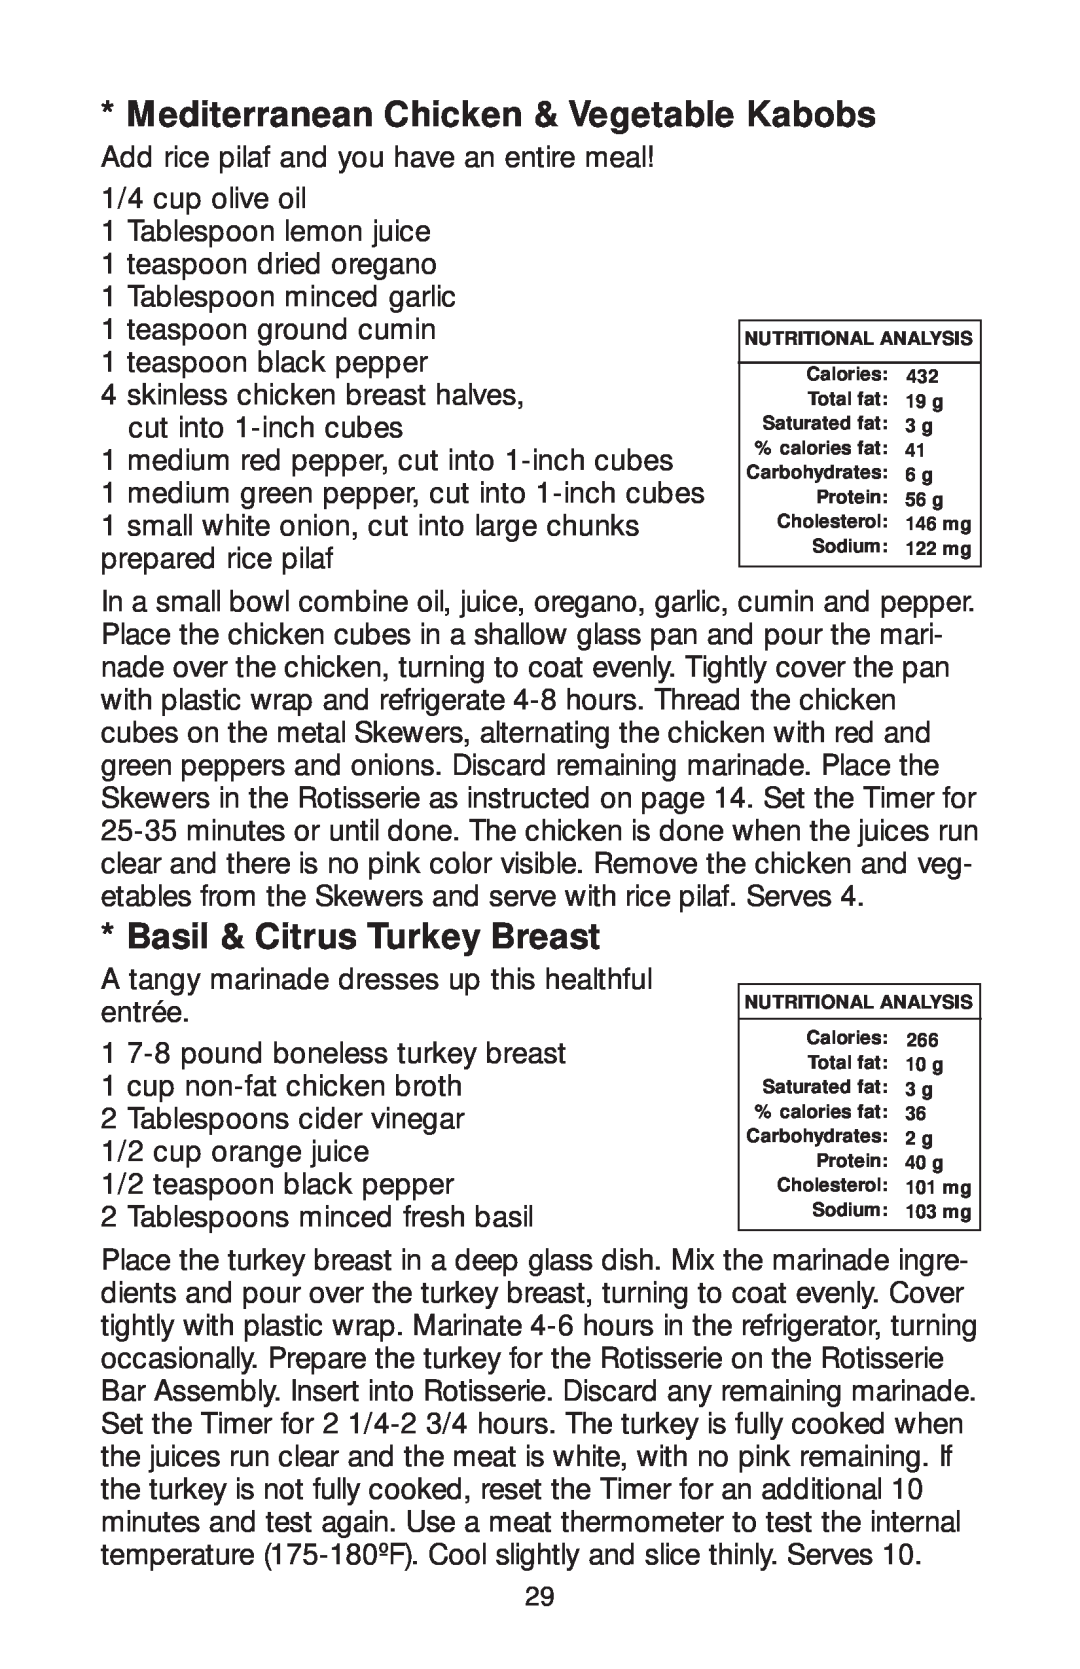 Salton GR82 owner manual Mediterranean Chicken & Vegetable Kabobs, Basil & Citrus Turkey Breast 